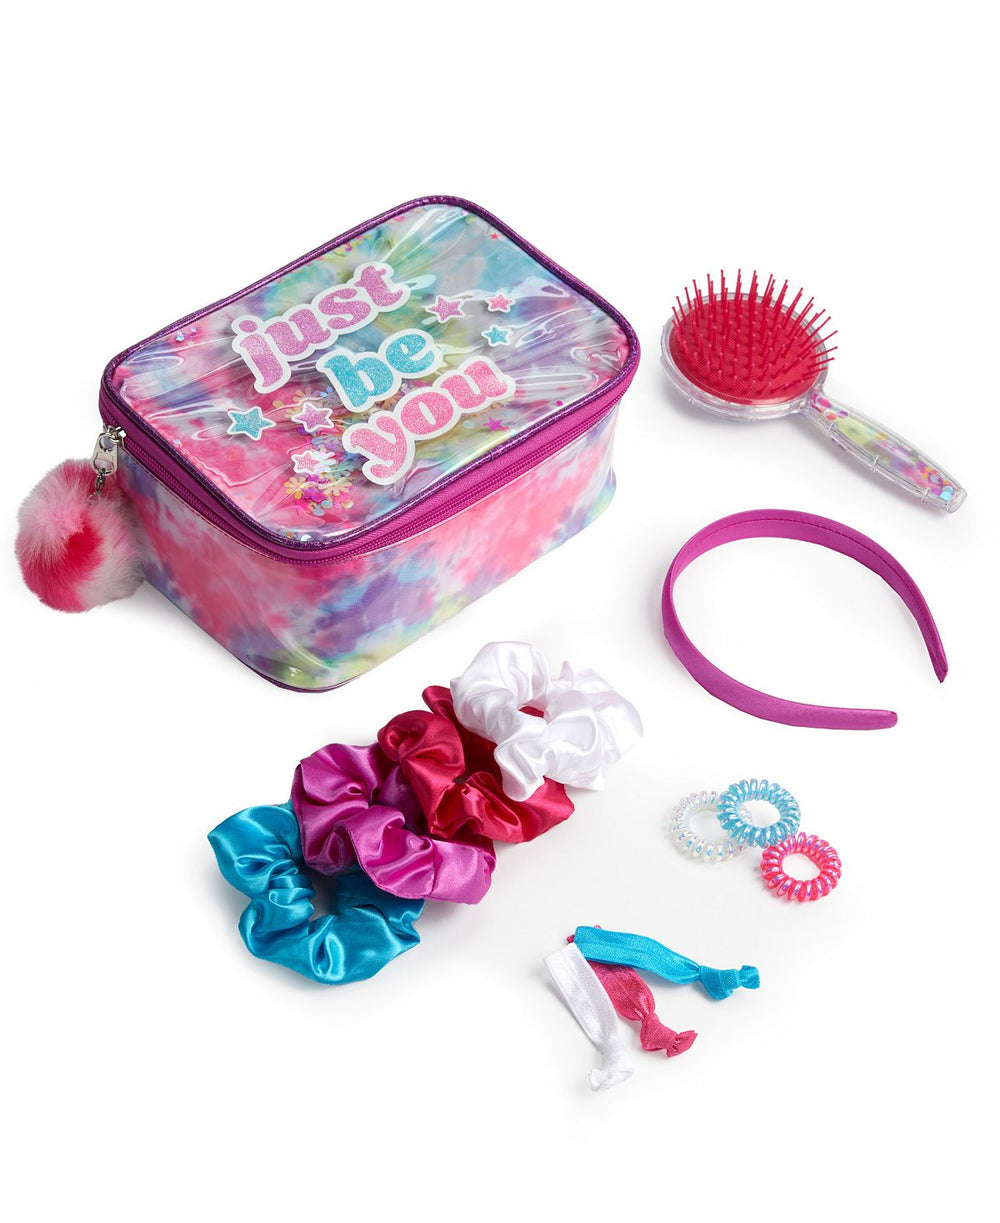 Geoffrey's Toy Box 13-Piece Rainbow Salon Hair Accessory Set for Kids